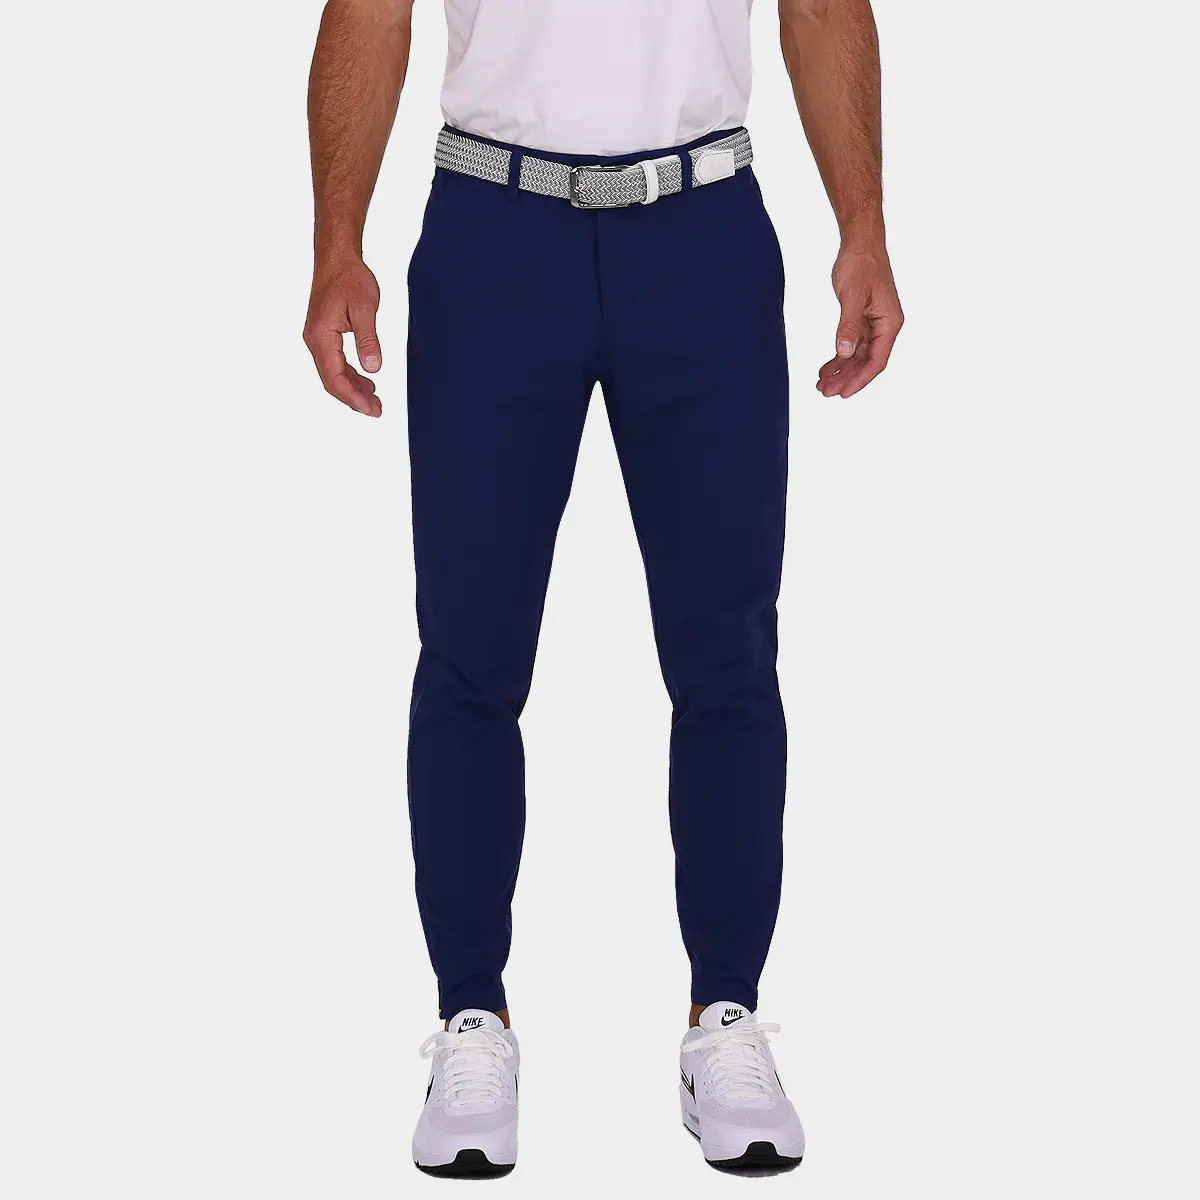 Shop Avalon Players Golf Jogger Pants: Navy Blue